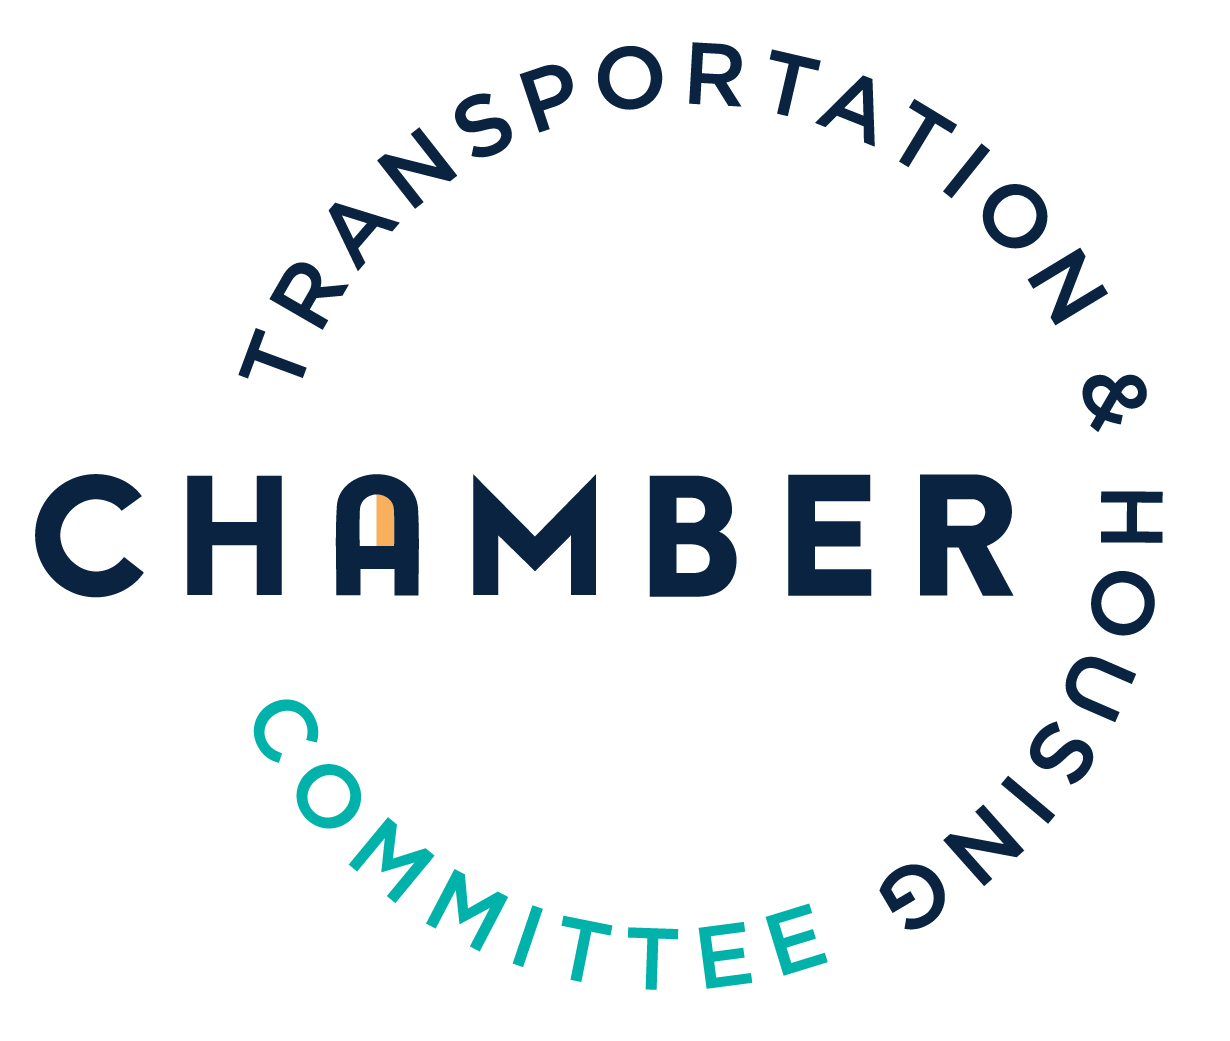 Transportation & Housing Committee